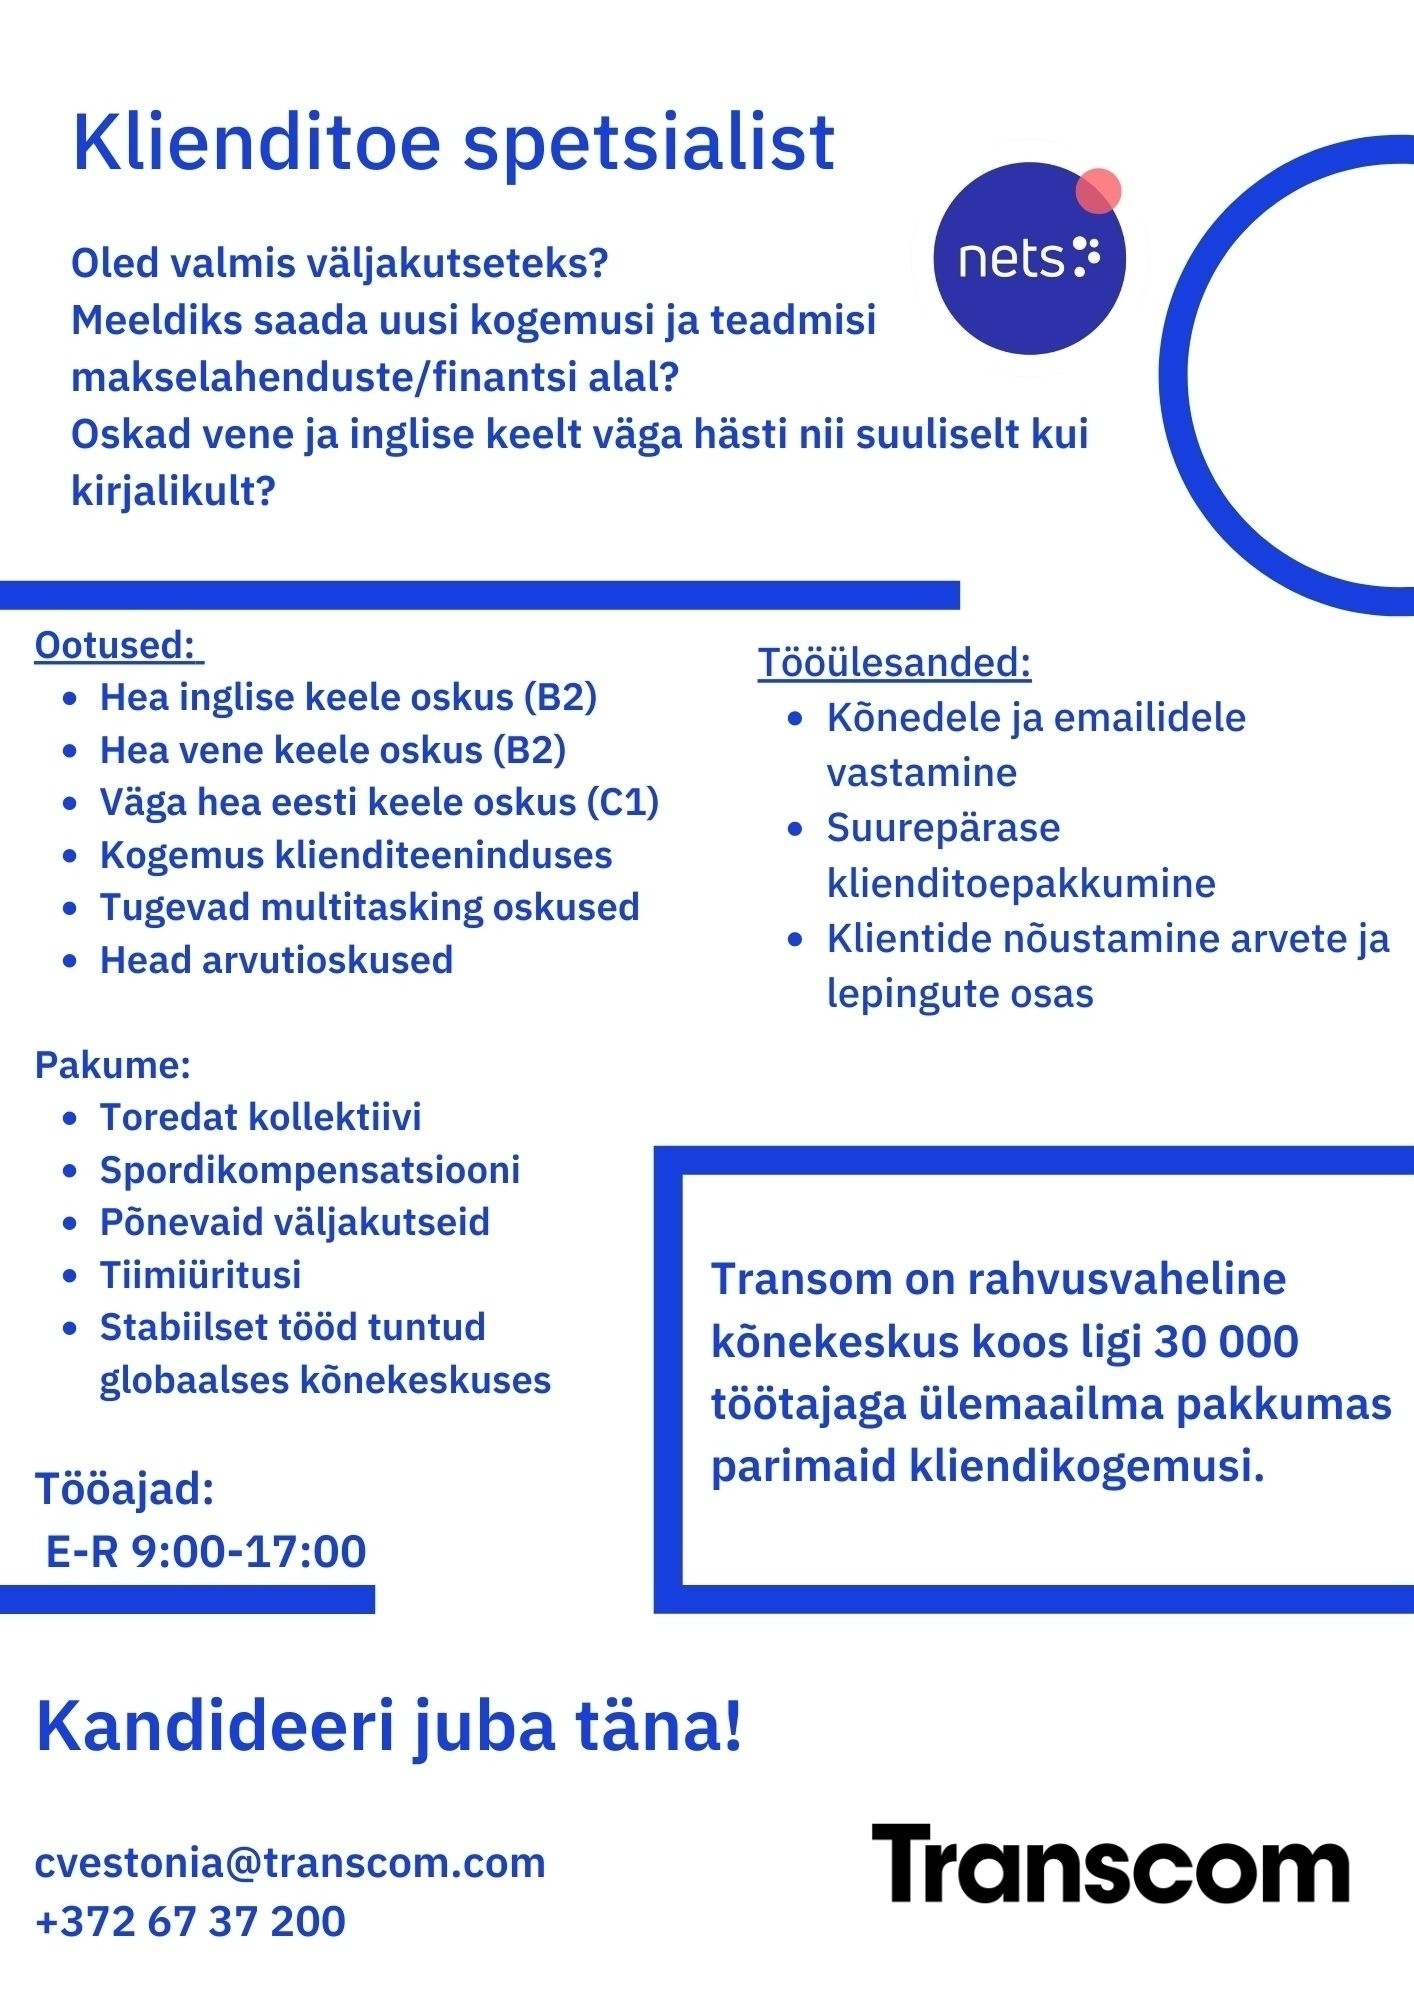 Transcom Eesti OÜ Klienditoe spetsialist (tööaeg E-R: 09:00-17:00)